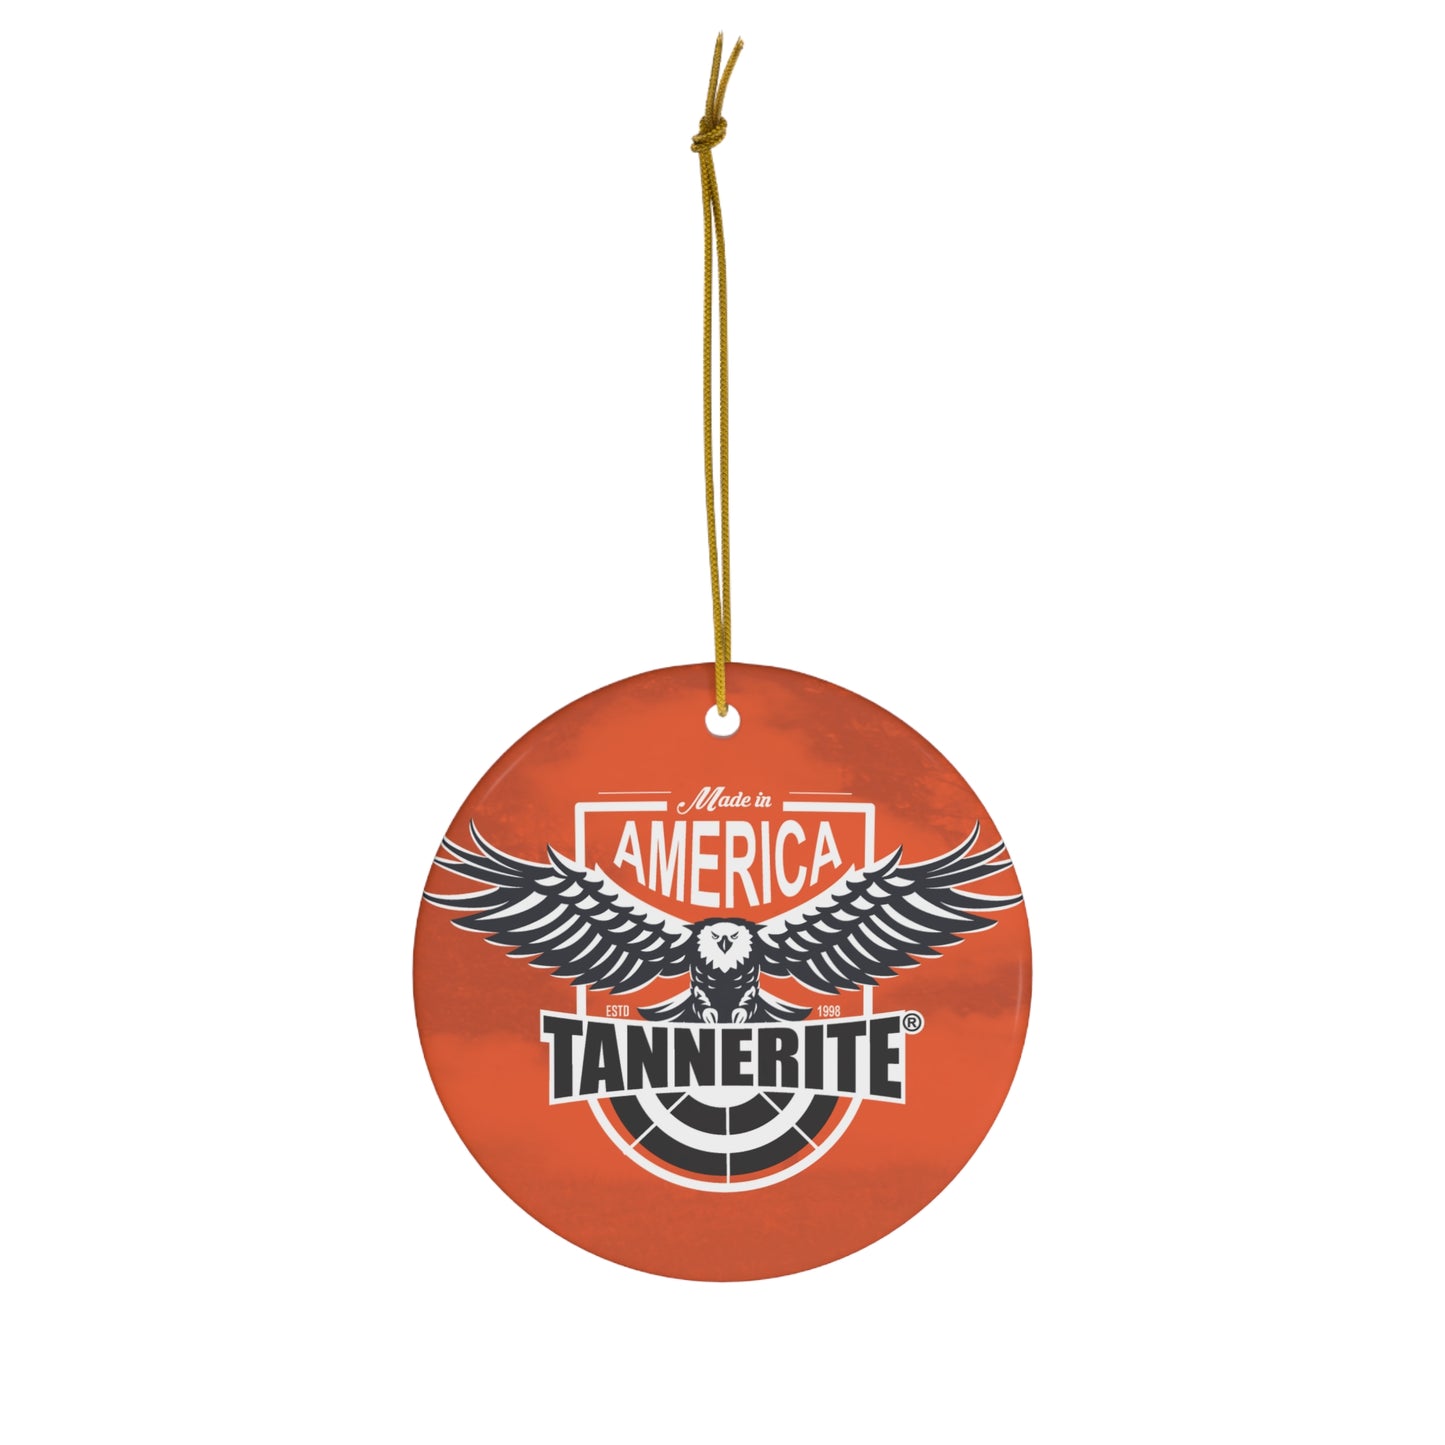 Made in America - Tannerite Ceramic Ornament